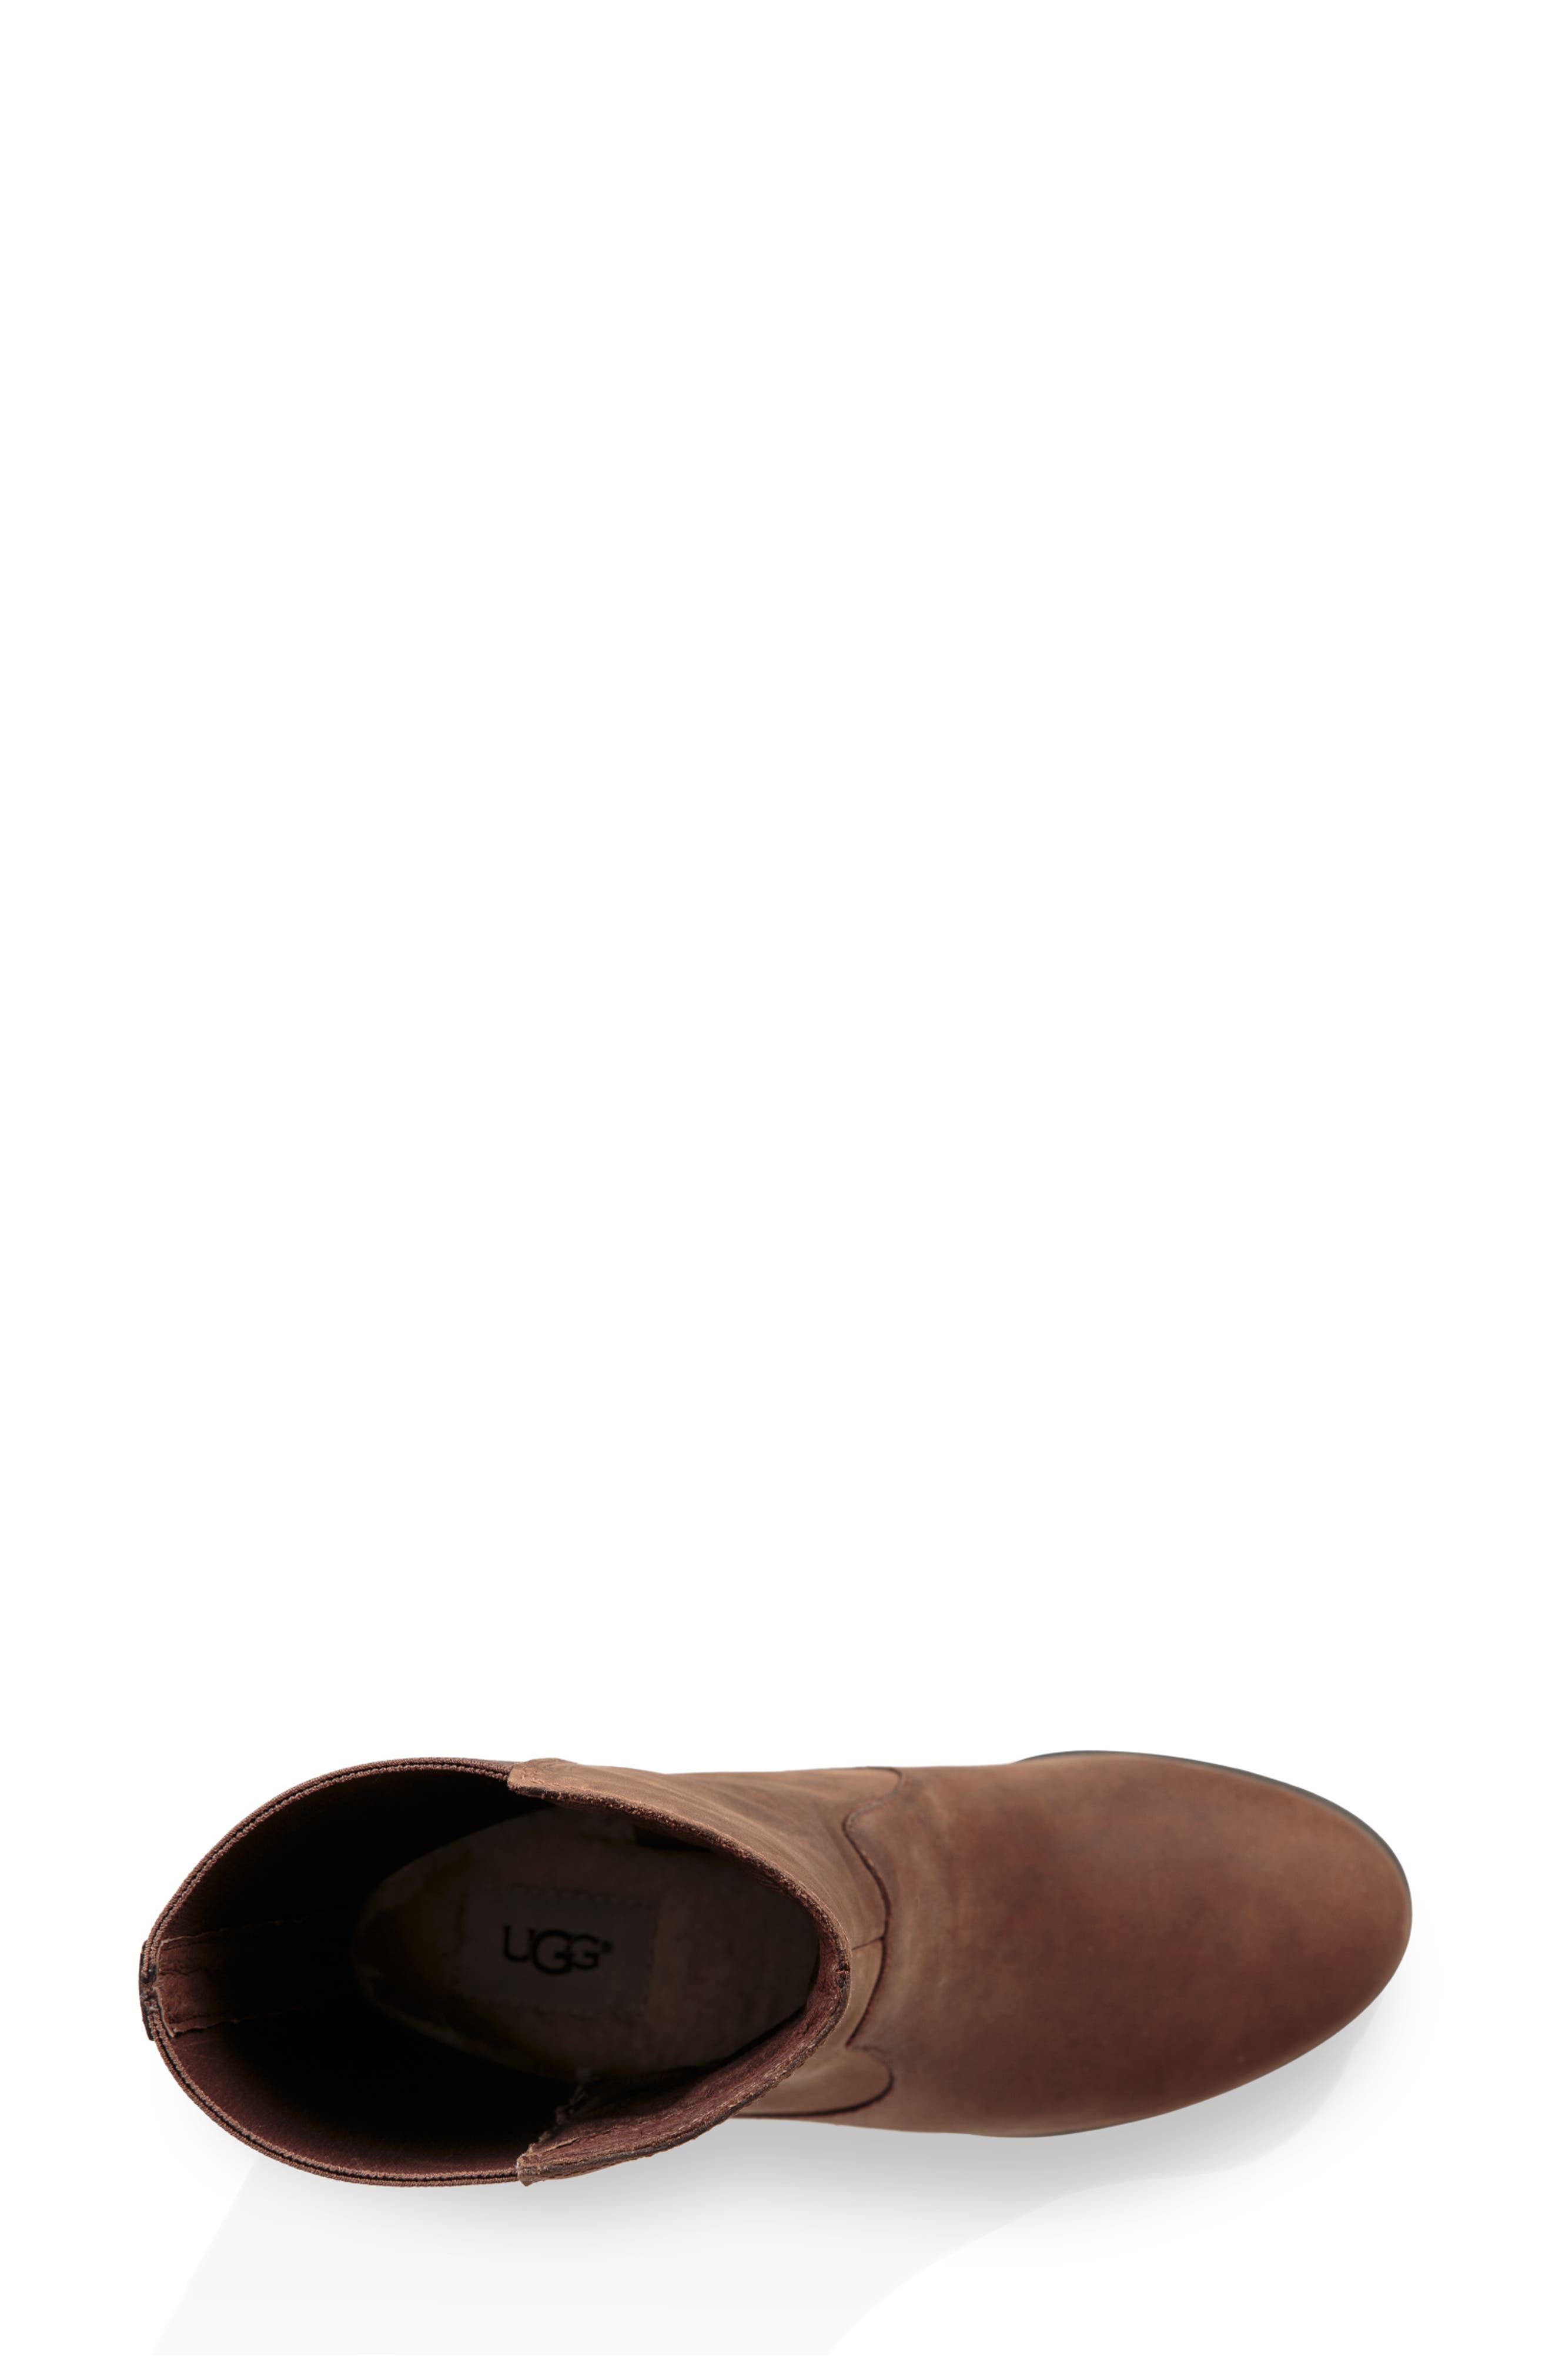 coraline waterproof leather boot